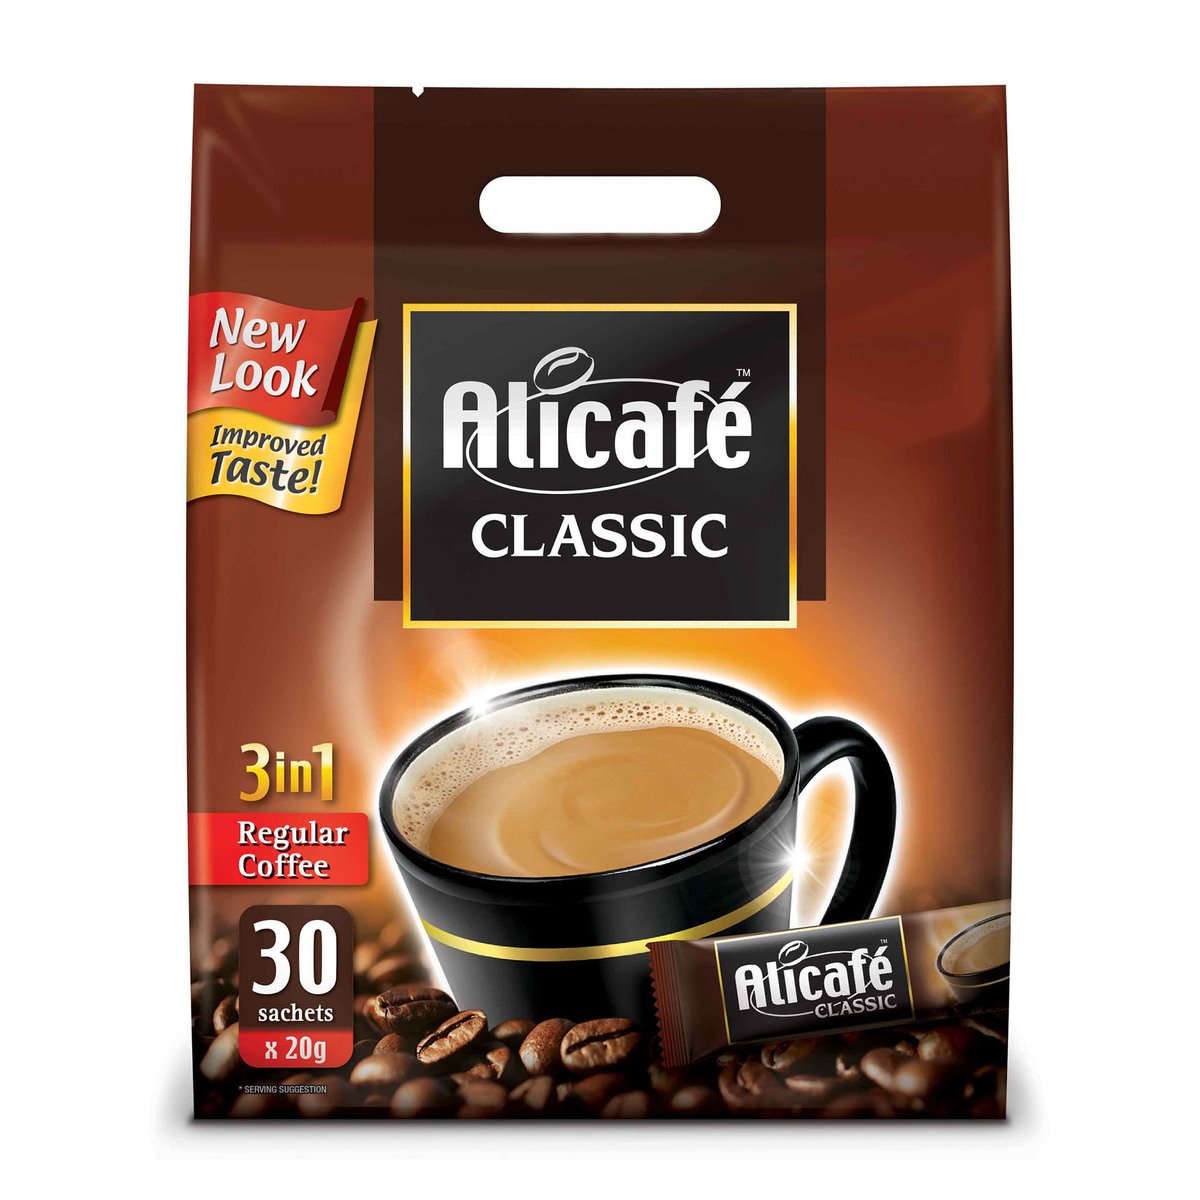 Alicafe Classic Coffee 20 g x 30 pcs